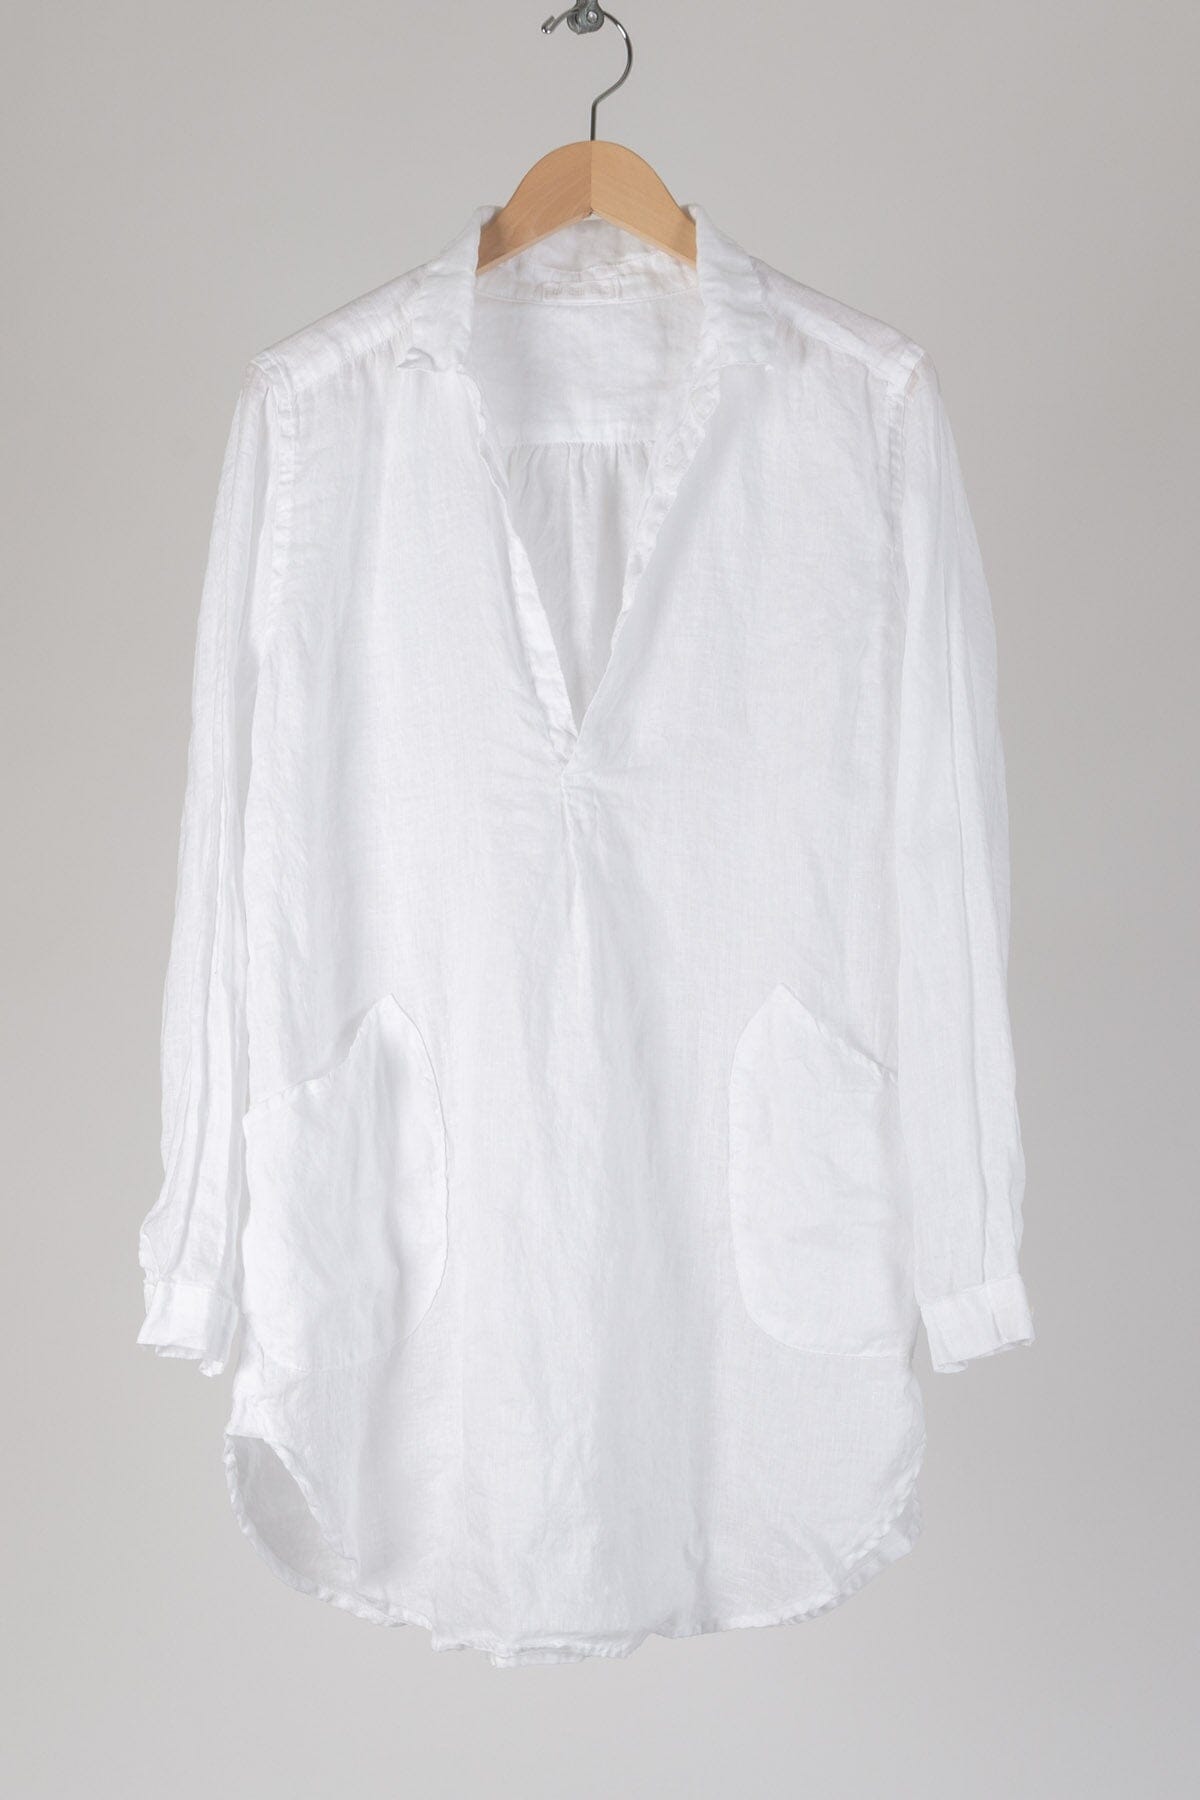 Teton - Linen S10 - Linen Shirt/Top/Tunic CP Shades 